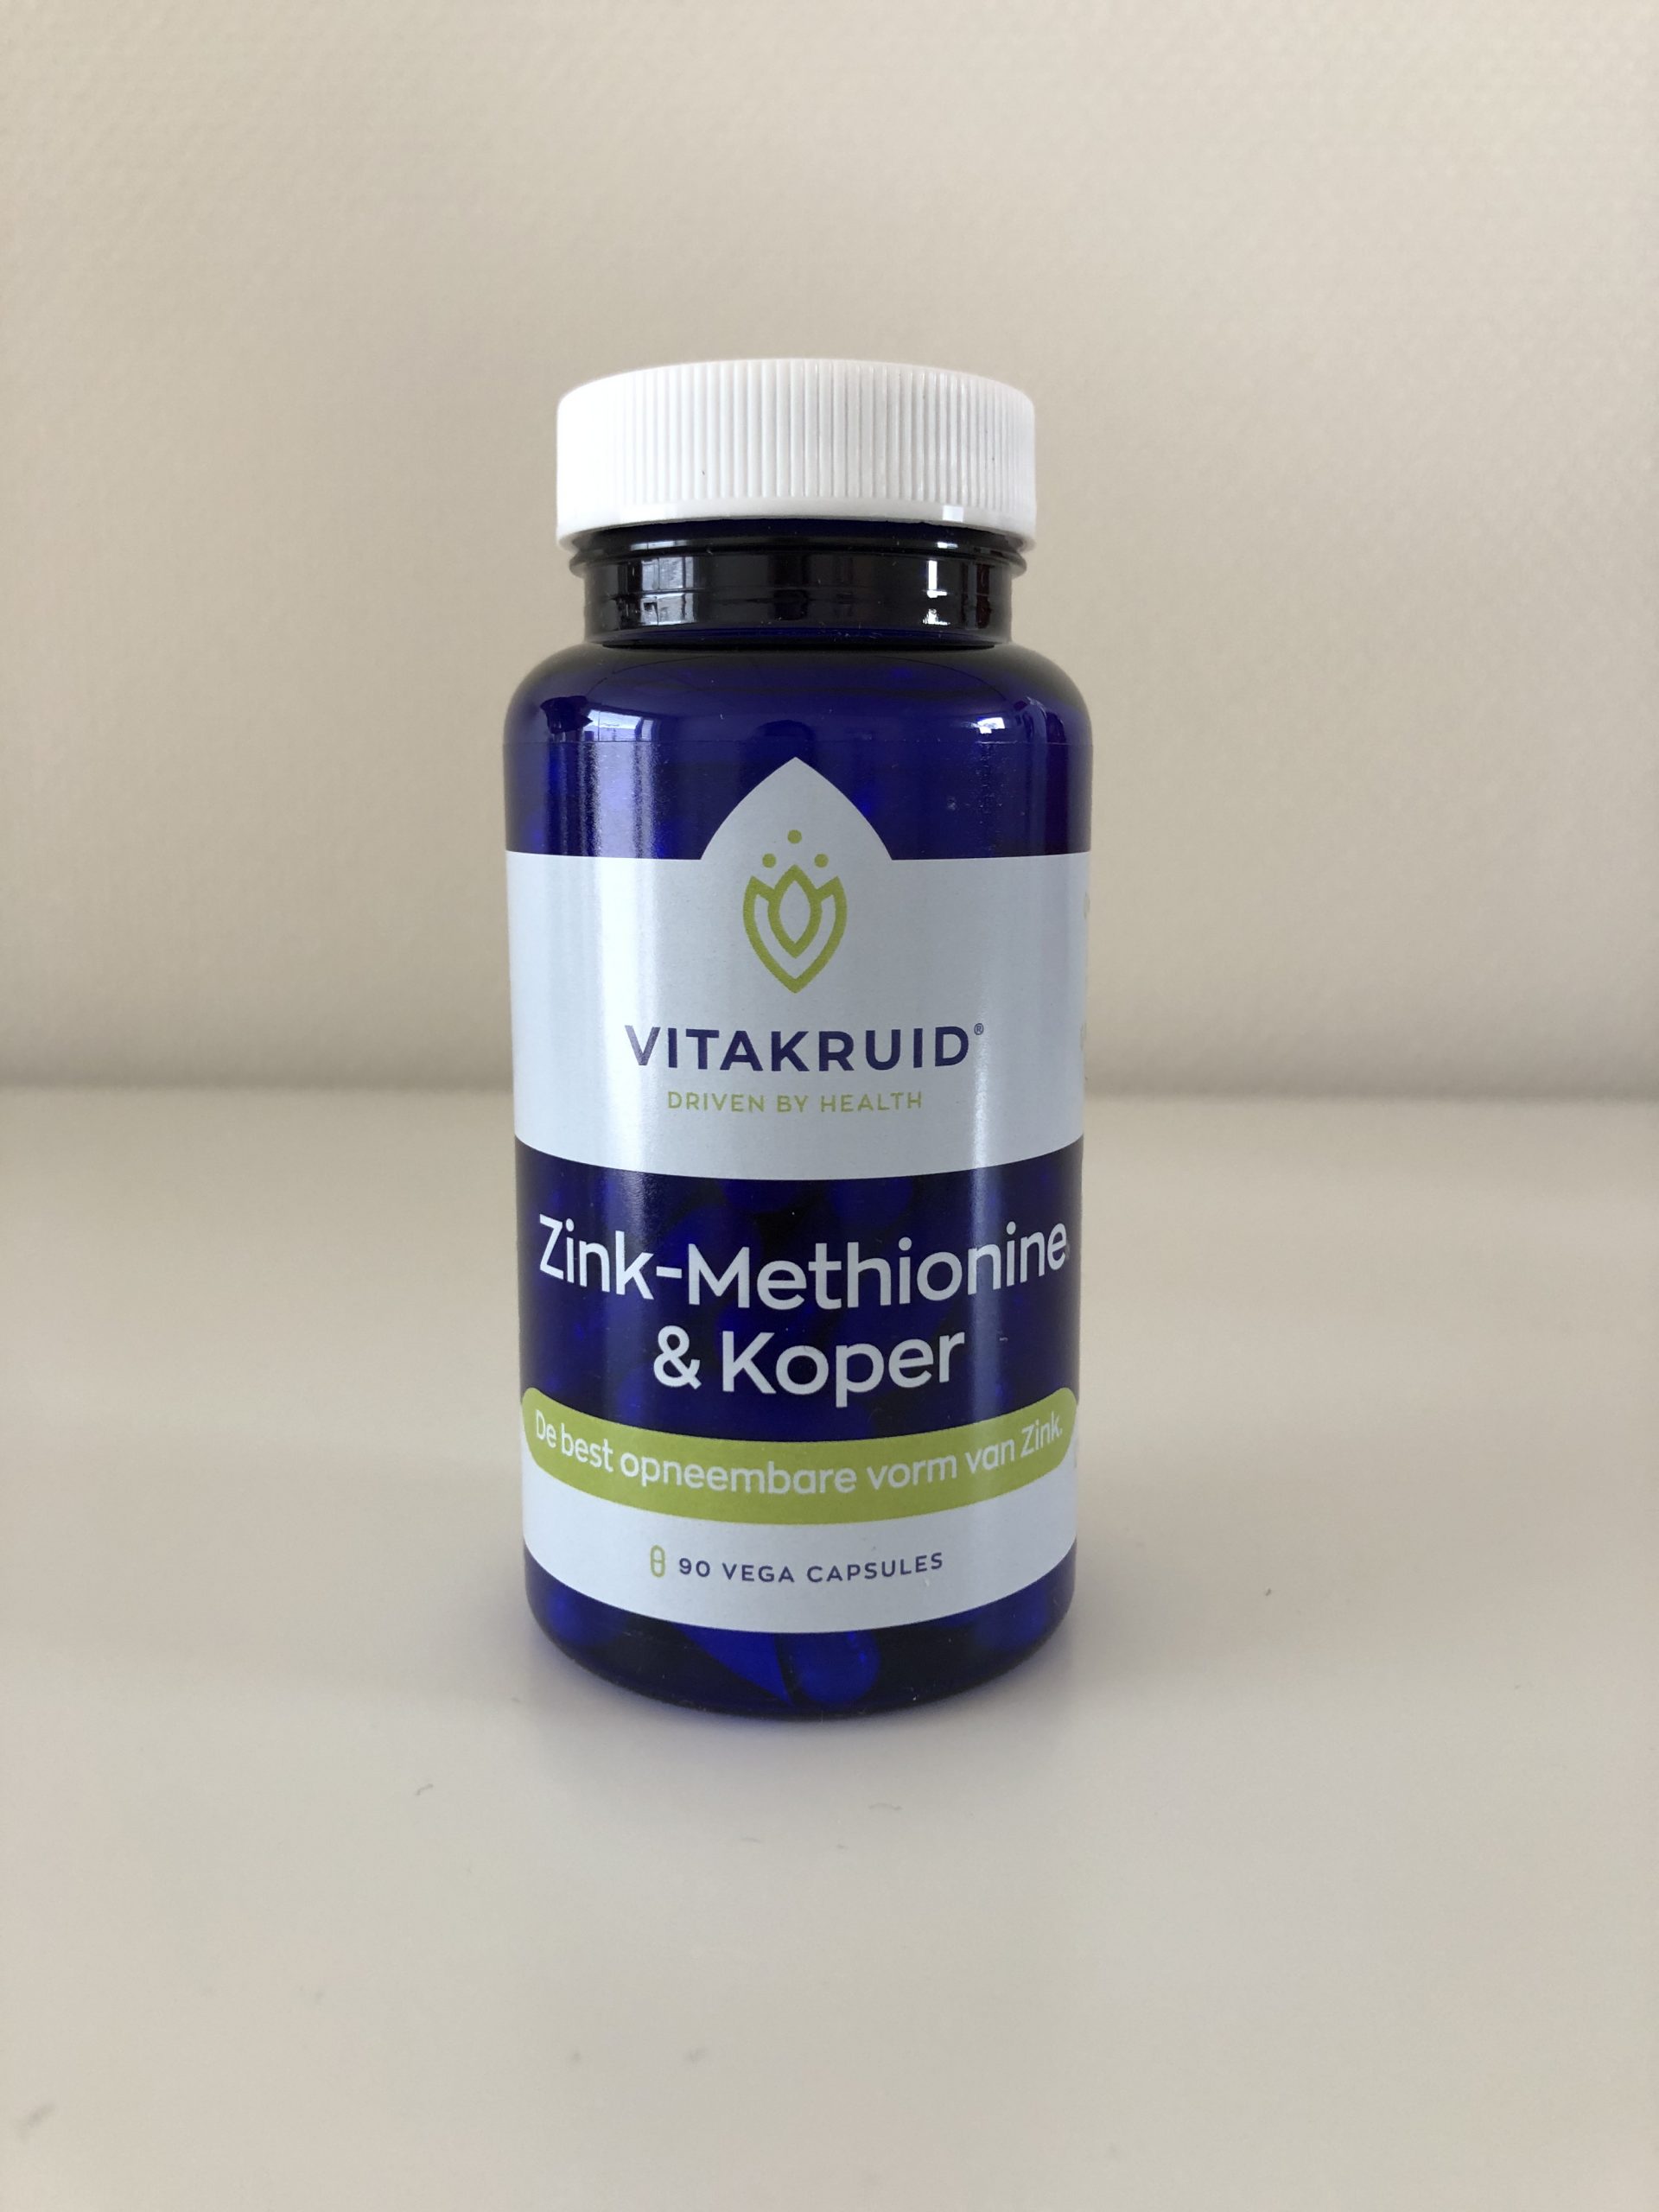 Christus Maxim Bijdrage Vitakruid Zink-Methionine & Koper - Derm Medic